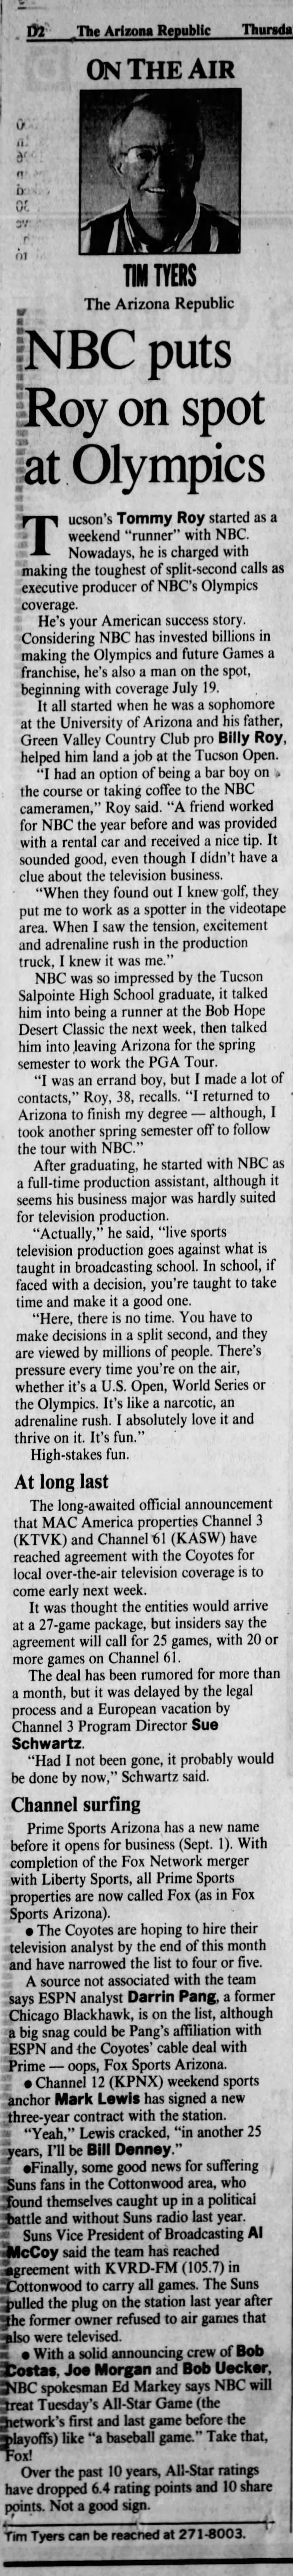 NBC puts Roy on spot at Olympics